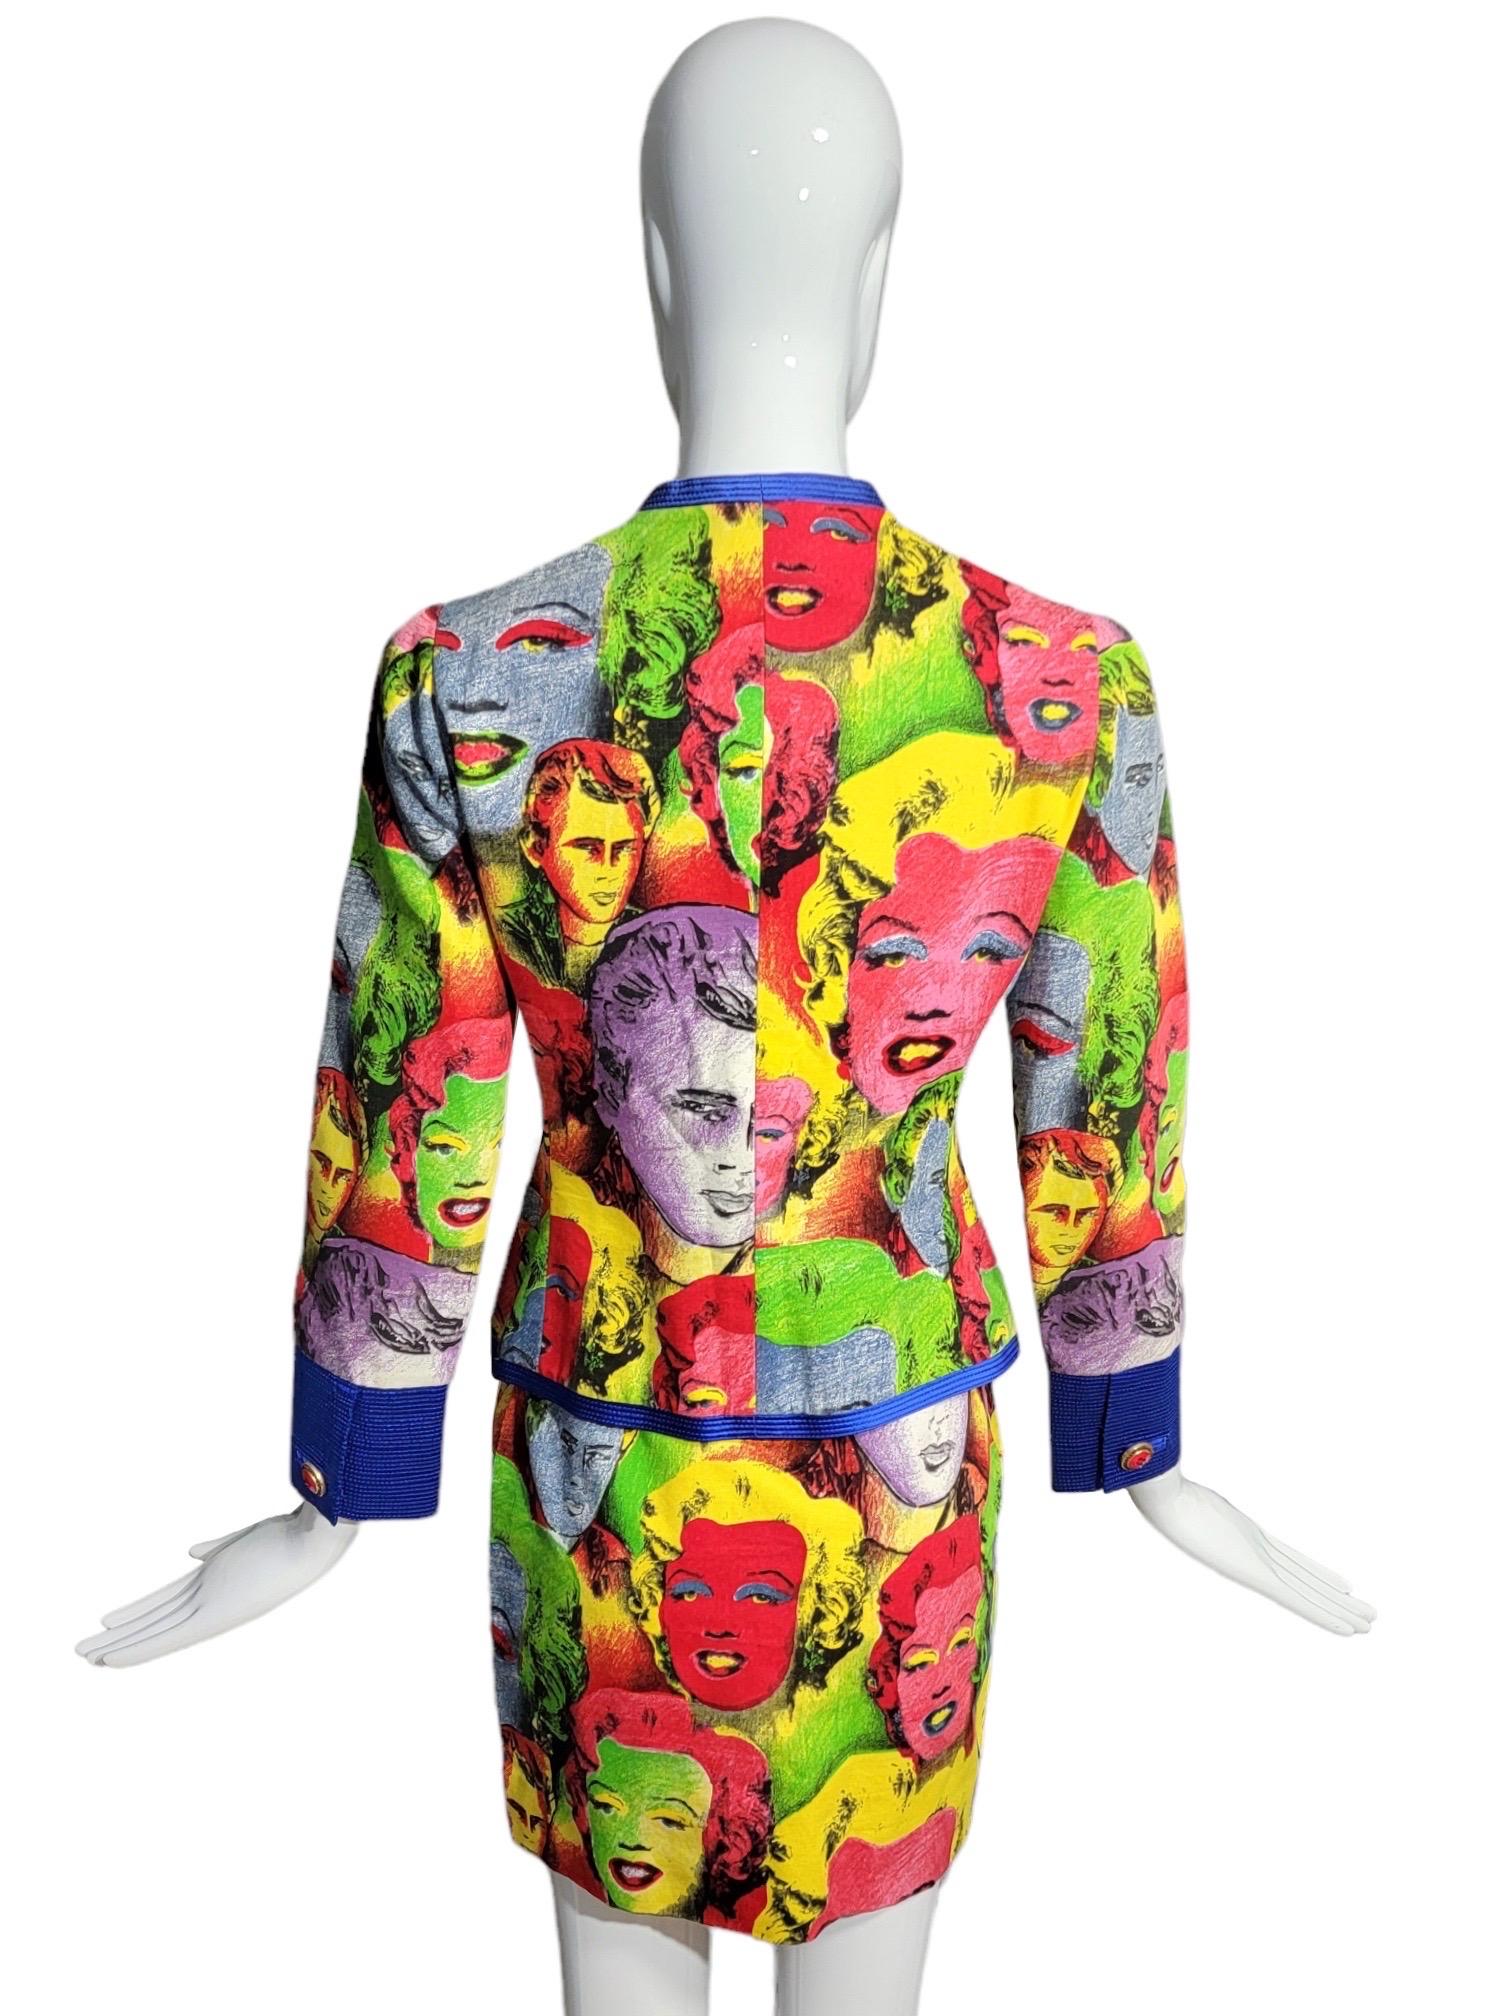  S/S 1991 Gianni Versace Marilyn Monroe Pop Art Warhol Skirt Suit For Sale 5